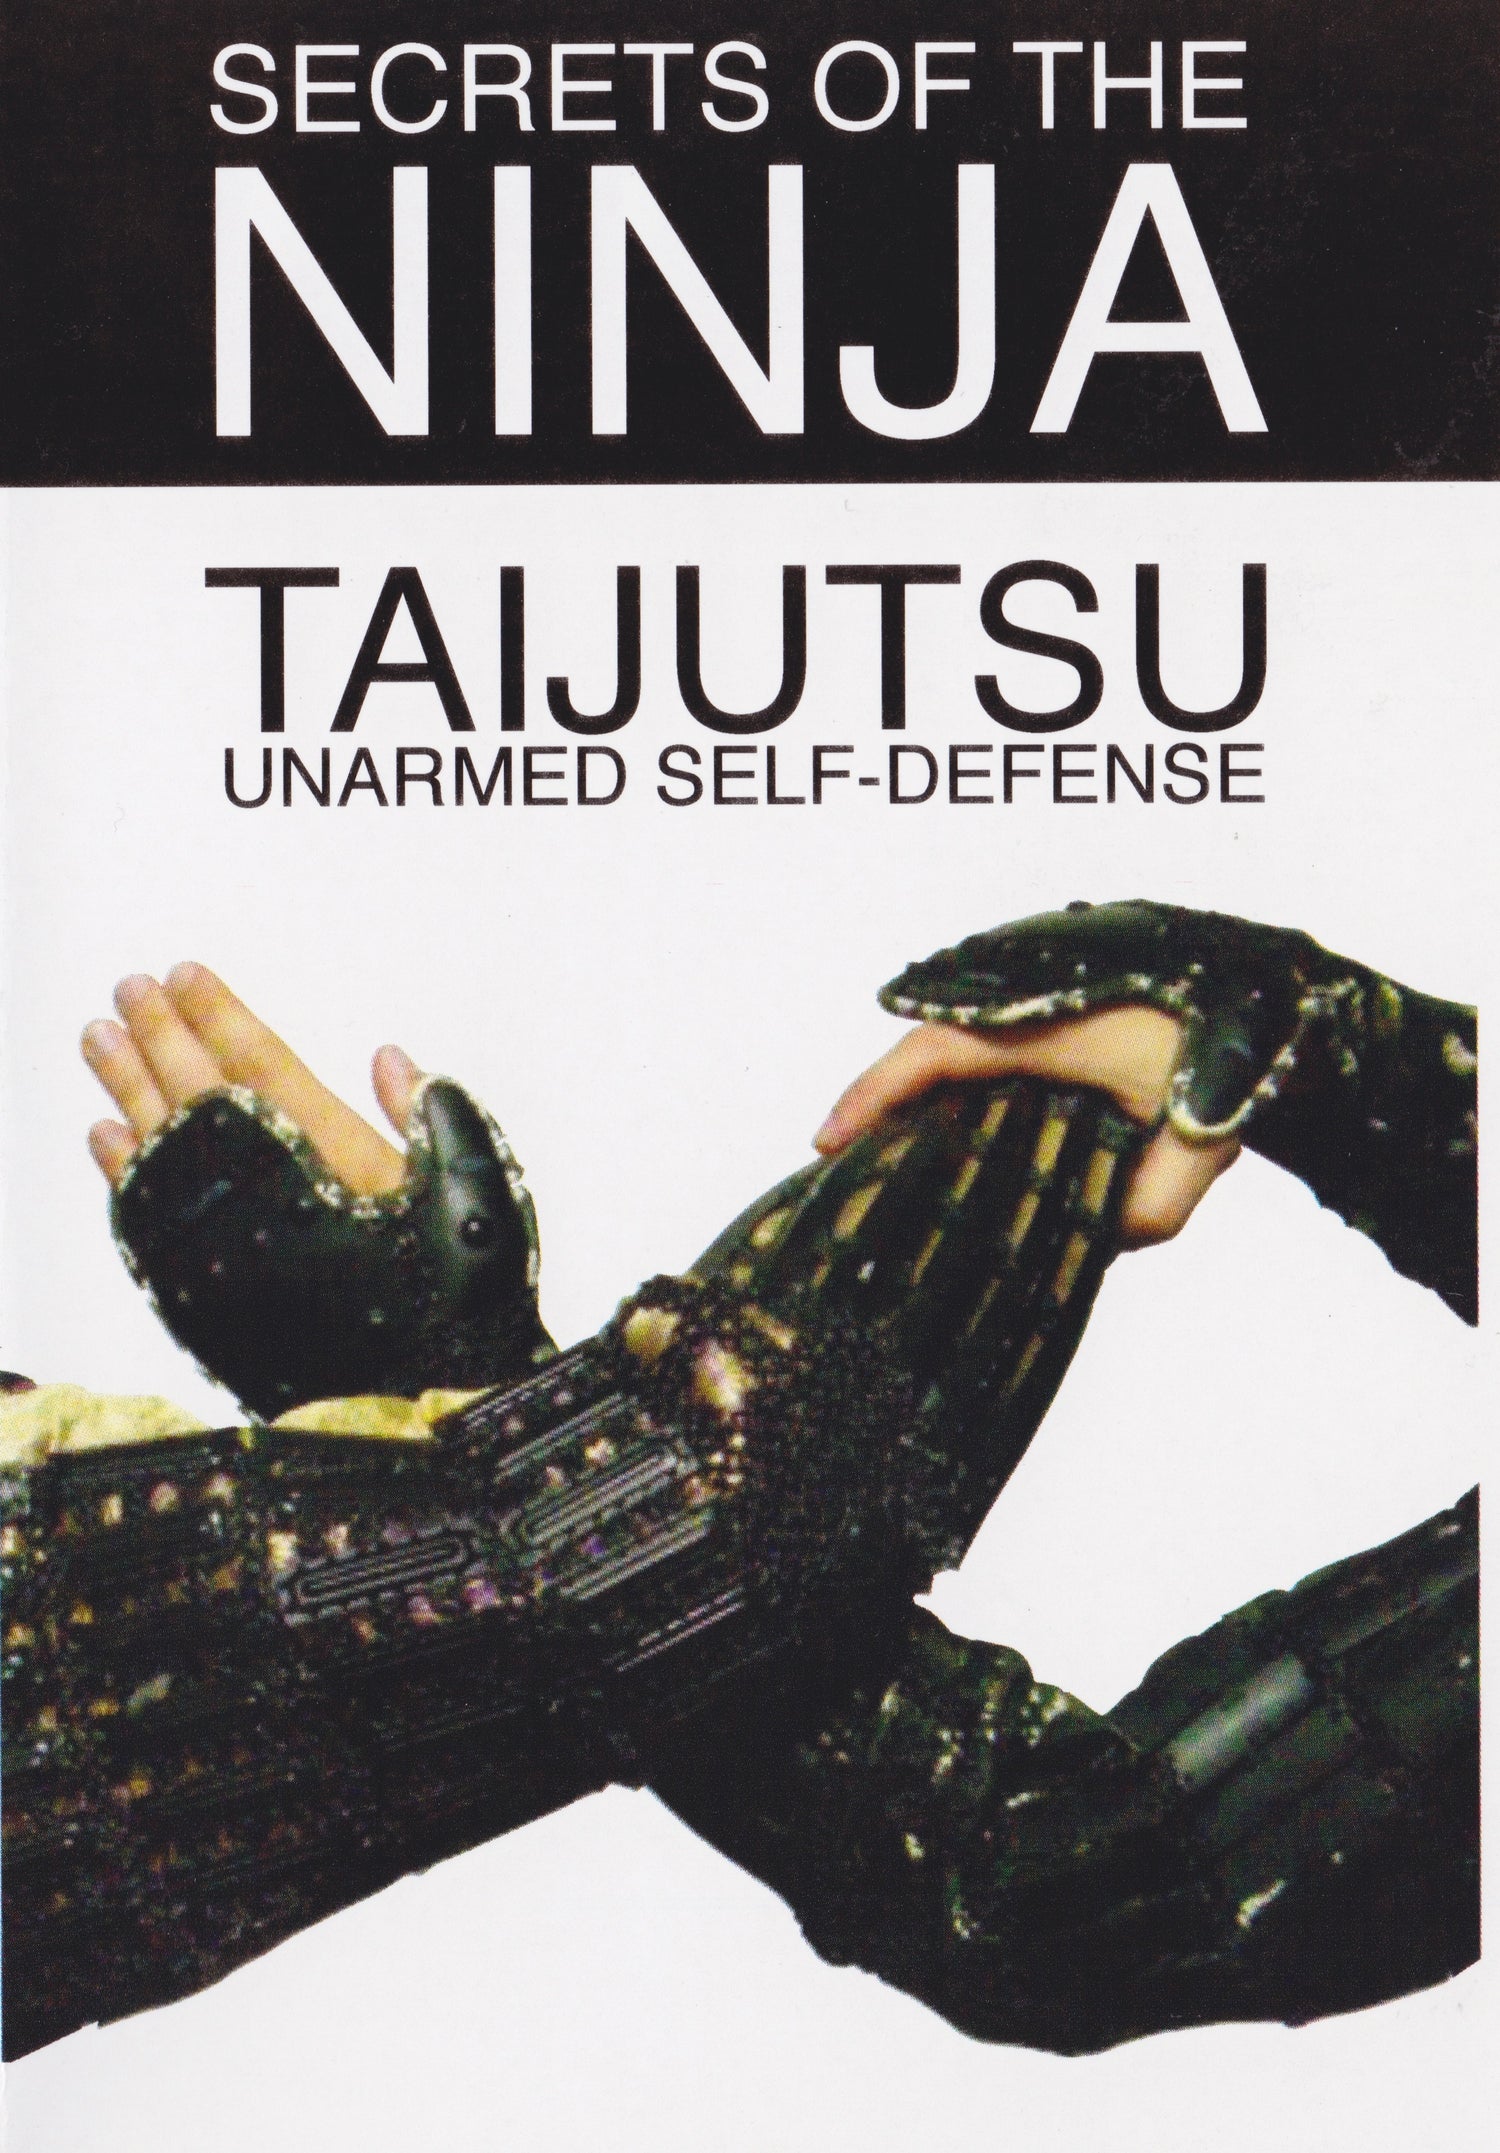 SECRETS OF THE NINJA Taijutsu Unarmed Self-Defense DVD with Stephen Hayes